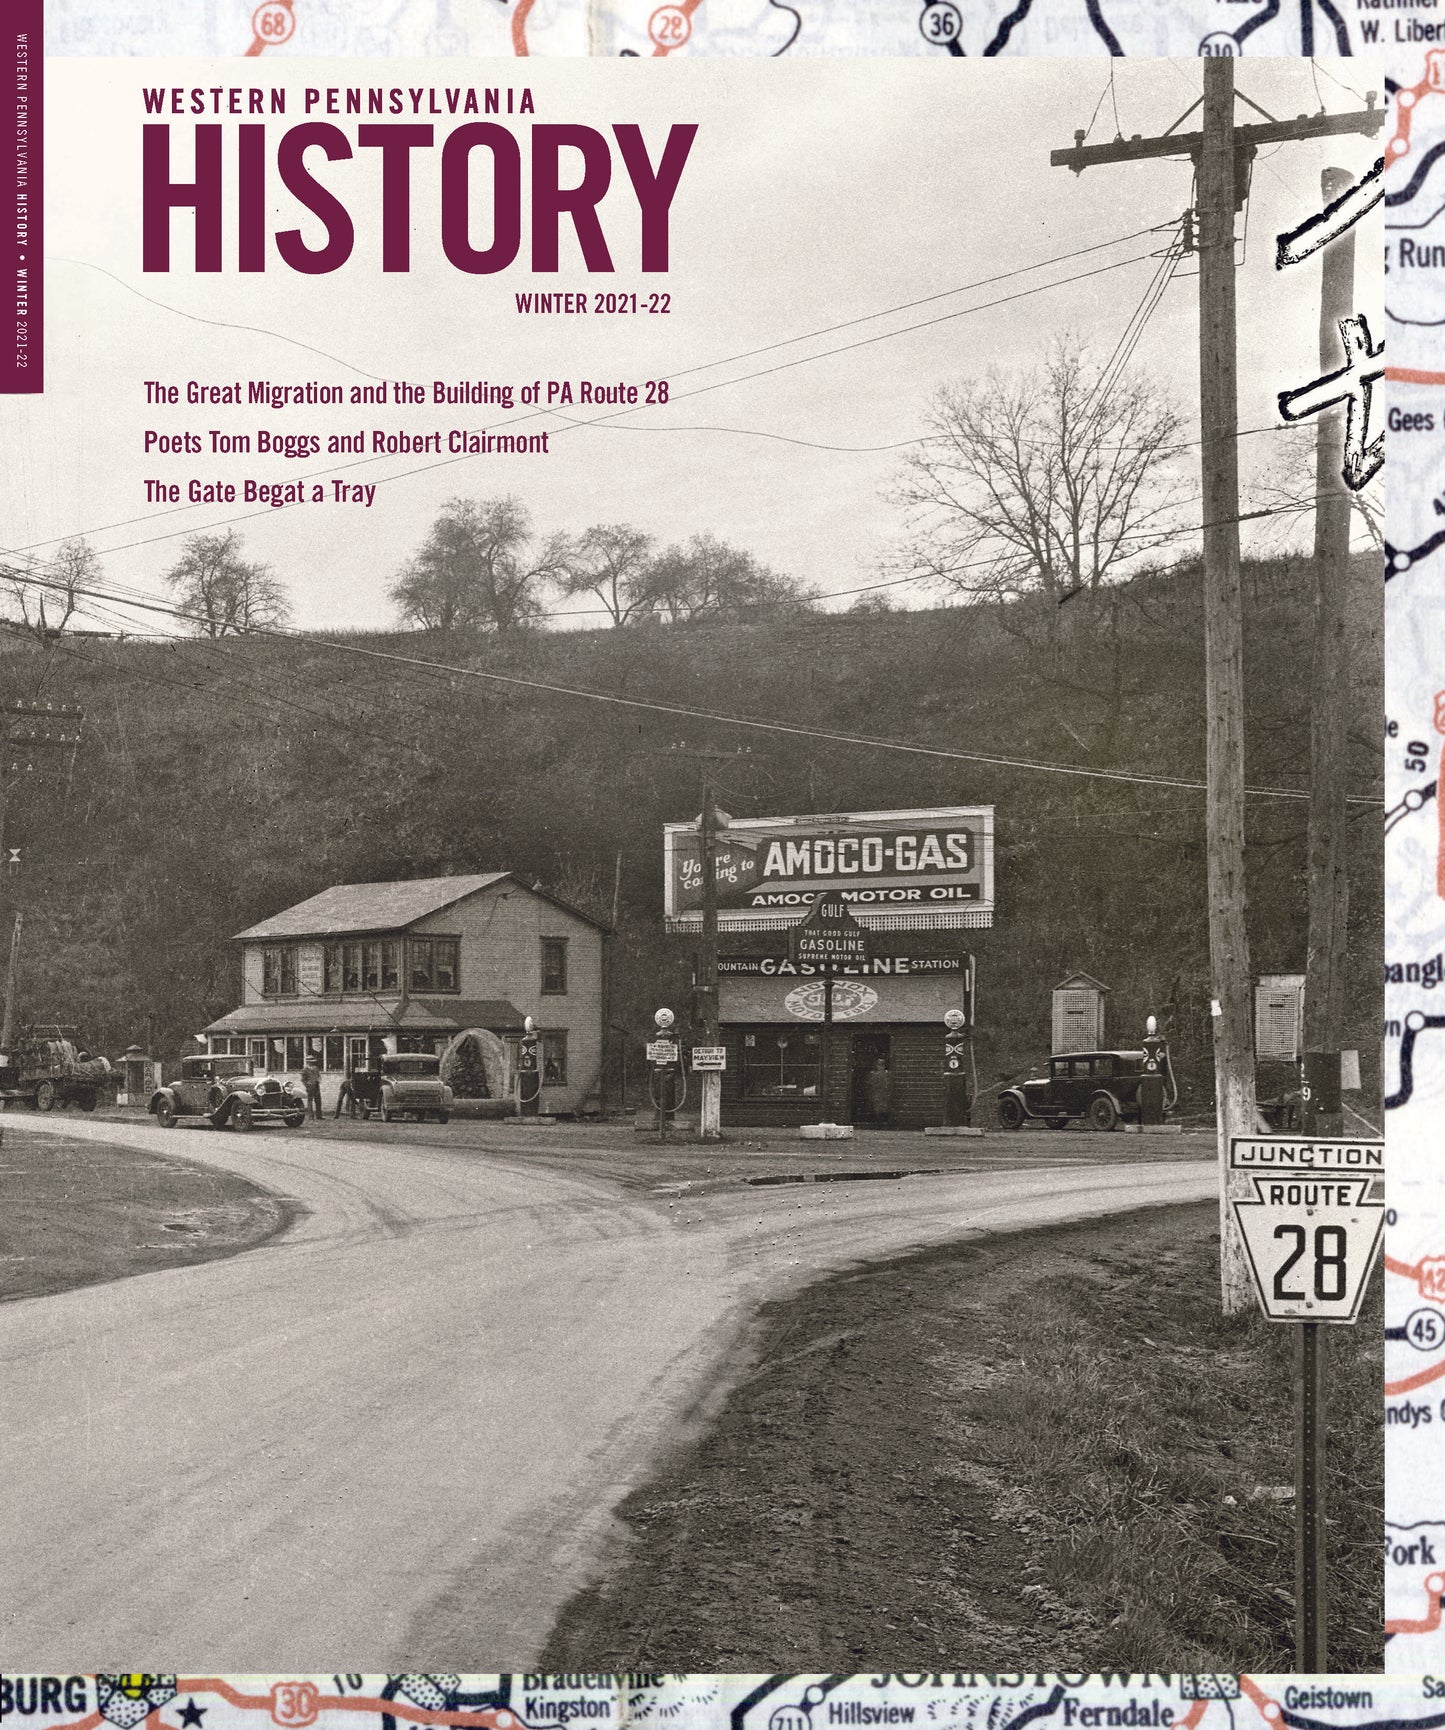 Western Pennsylvania History Magazine Winter 2021-22